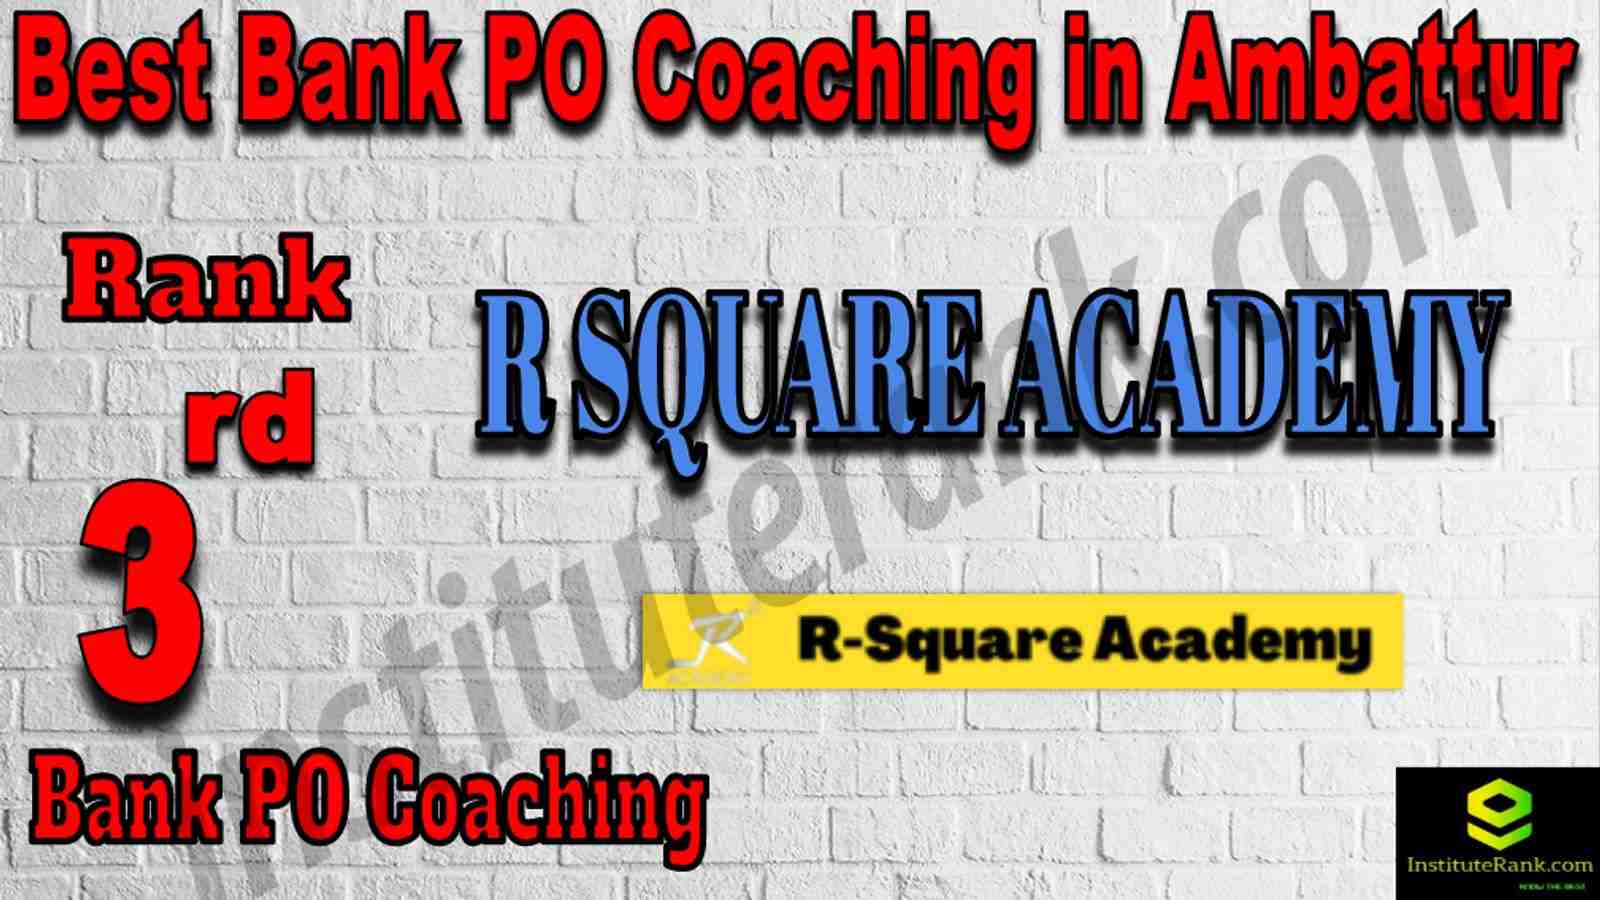 3rd Best Bank PO Coaching in Ambattur